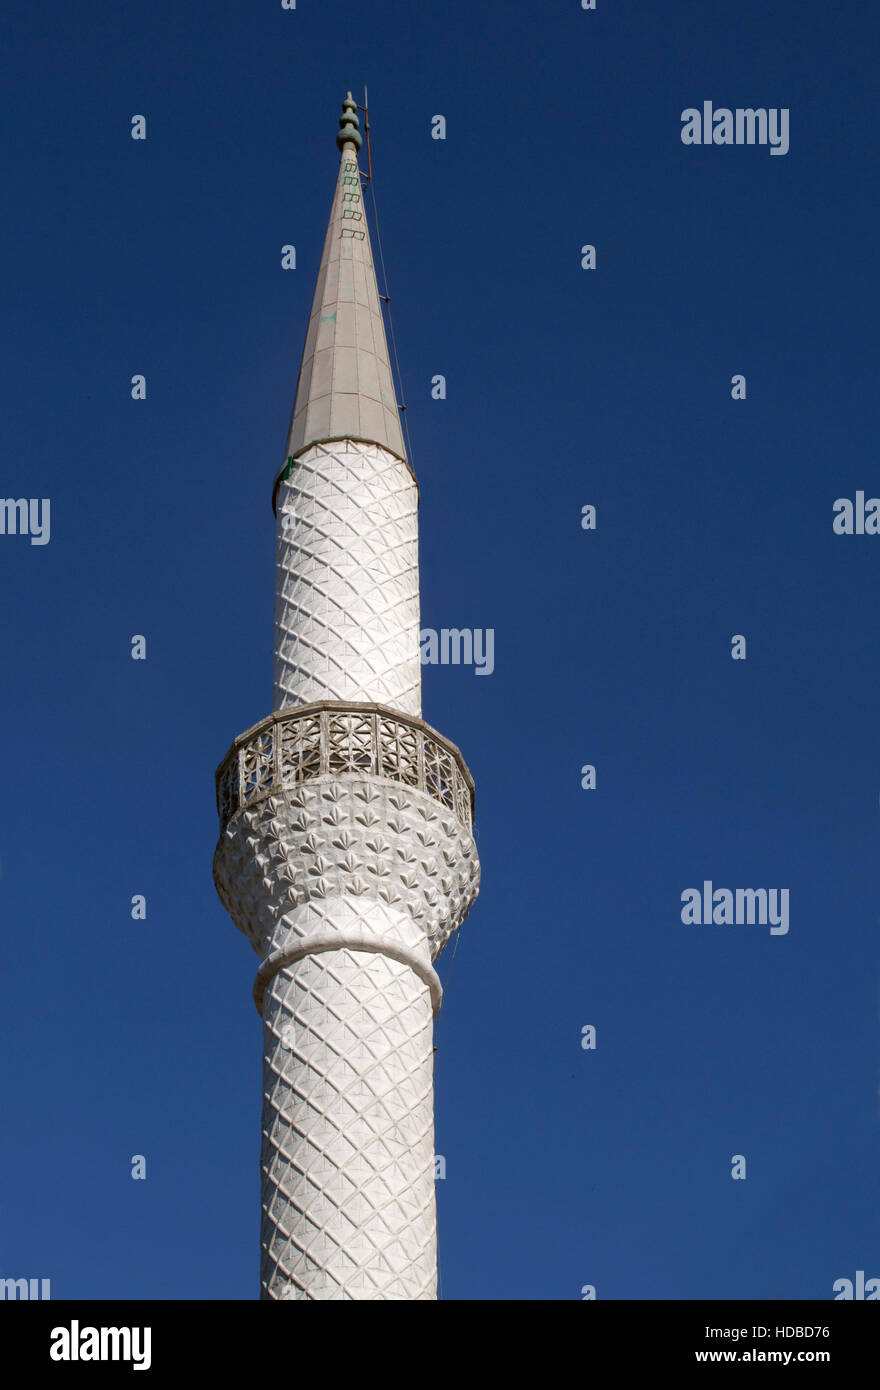 Minaret contre ciel bleu clair, vue de dessous Banque D'Images